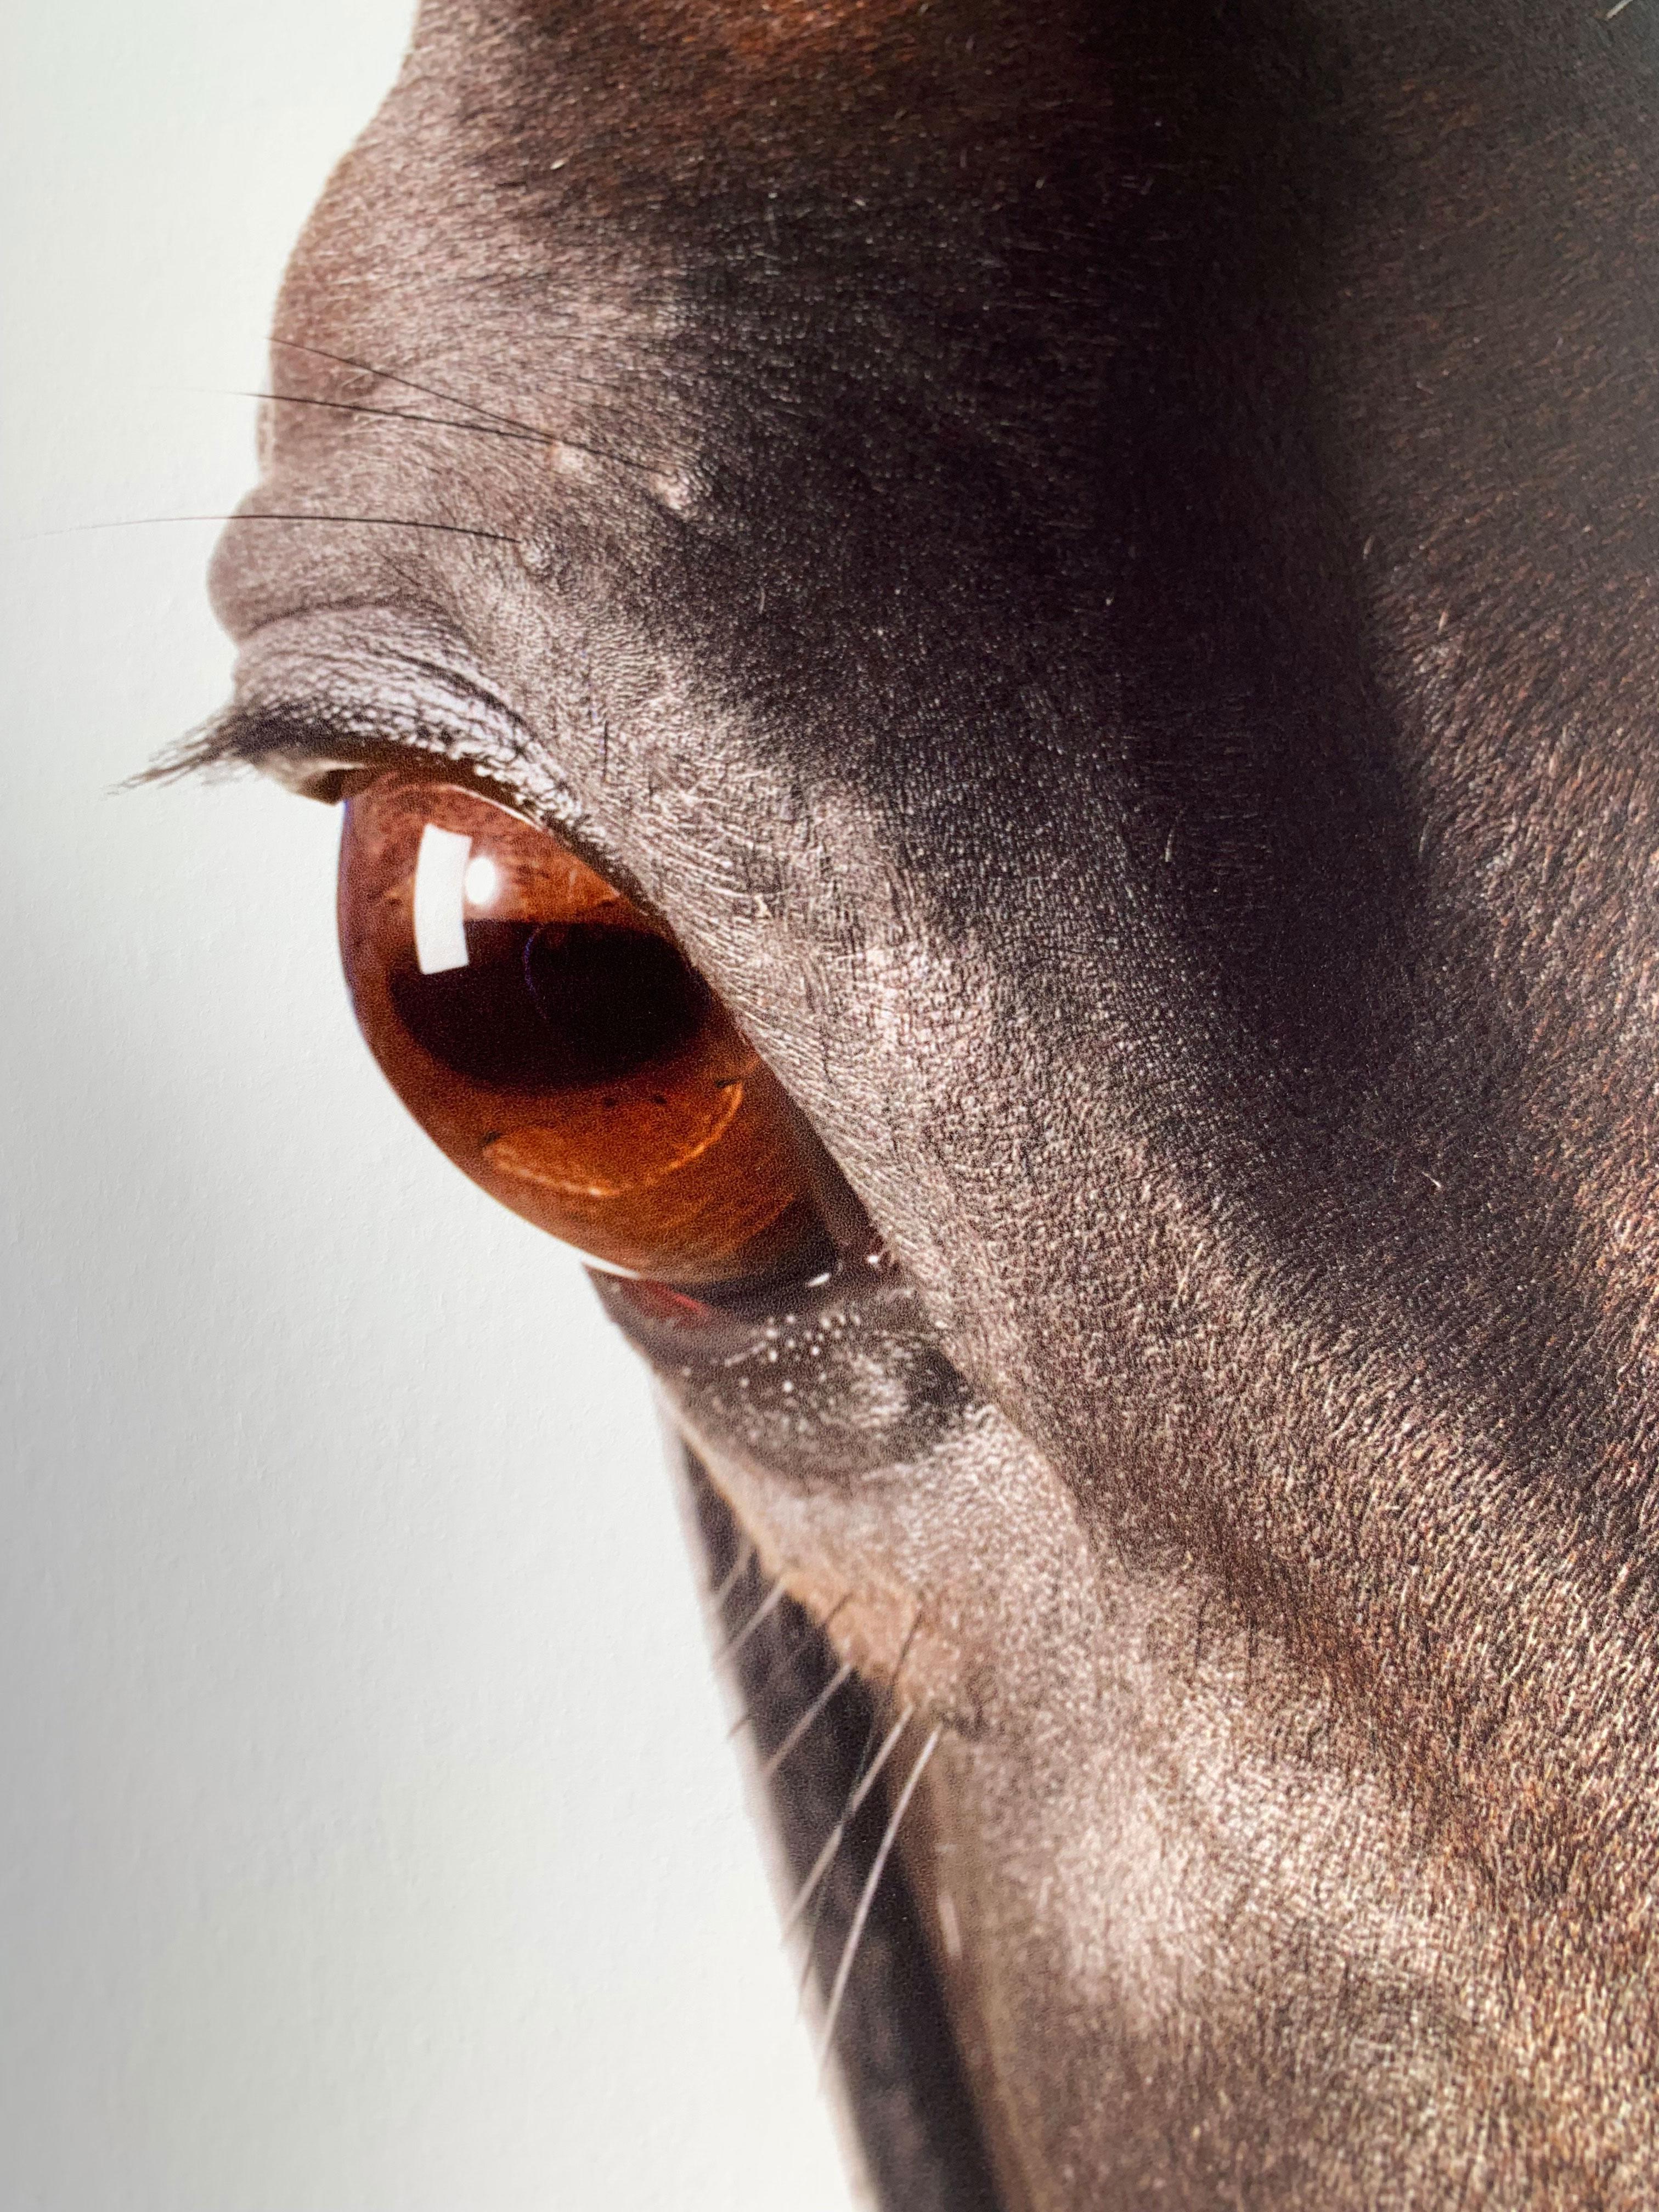 Medaglia d’Oro, Horse head and eye - Stallion Portrait unframed Print on Paper For Sale 1